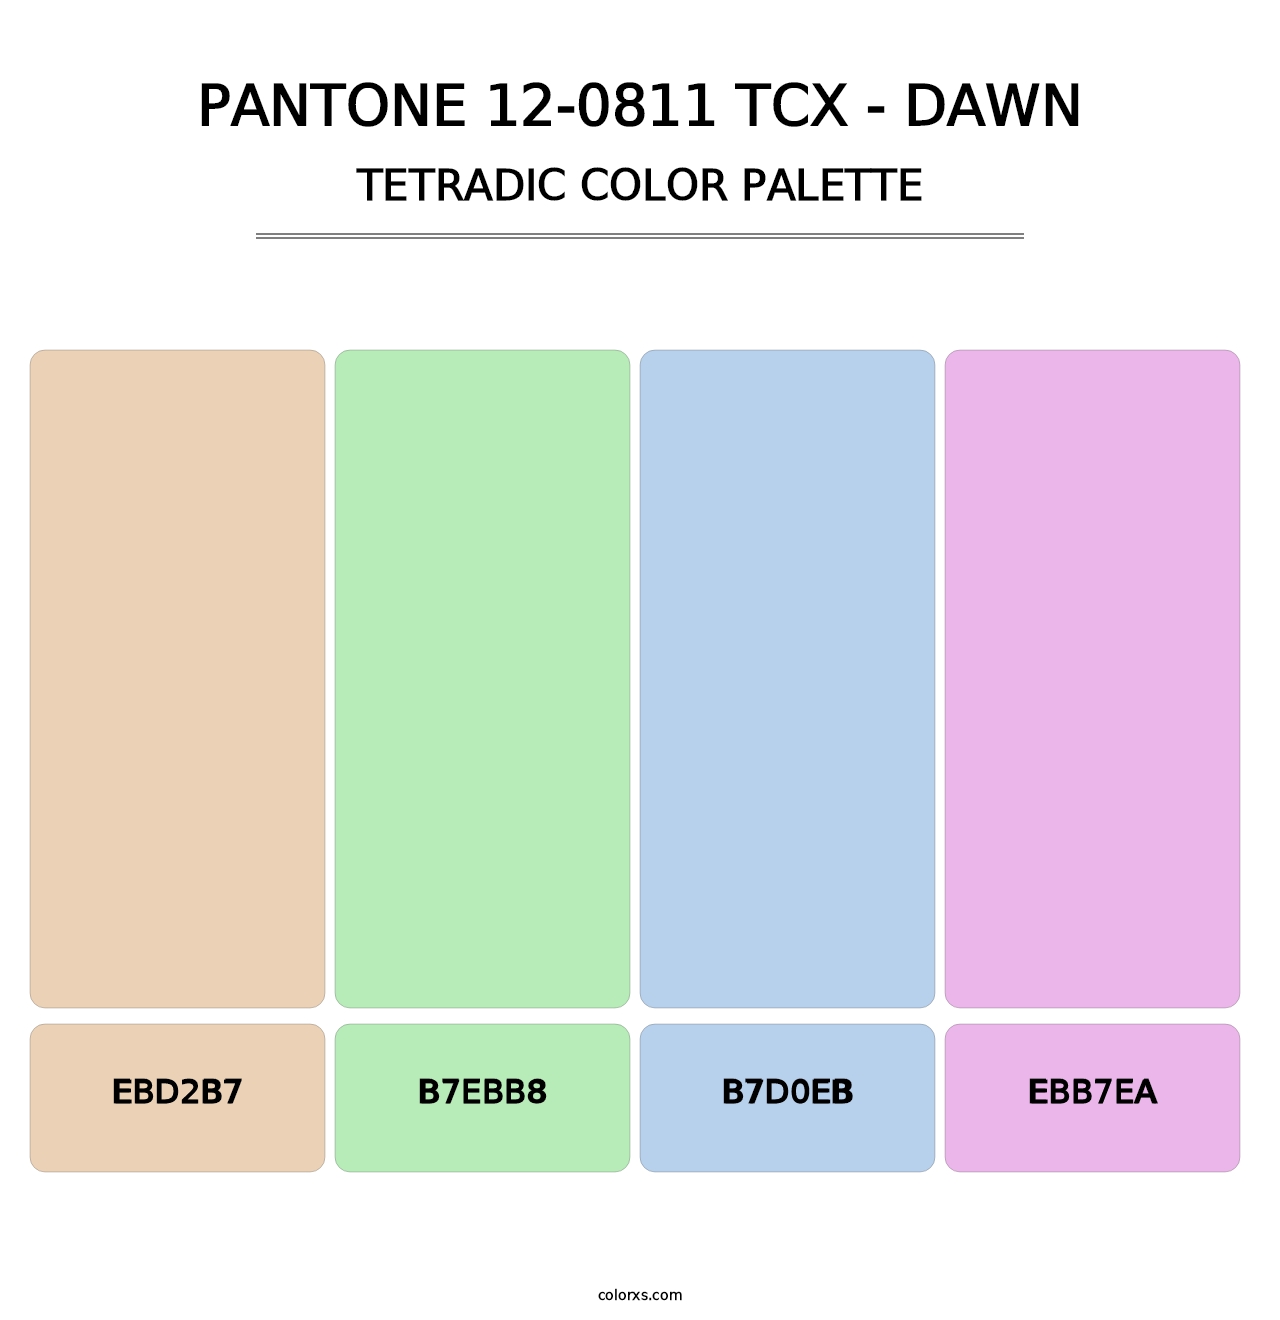 PANTONE 12-0811 TCX - Dawn - Tetradic Color Palette